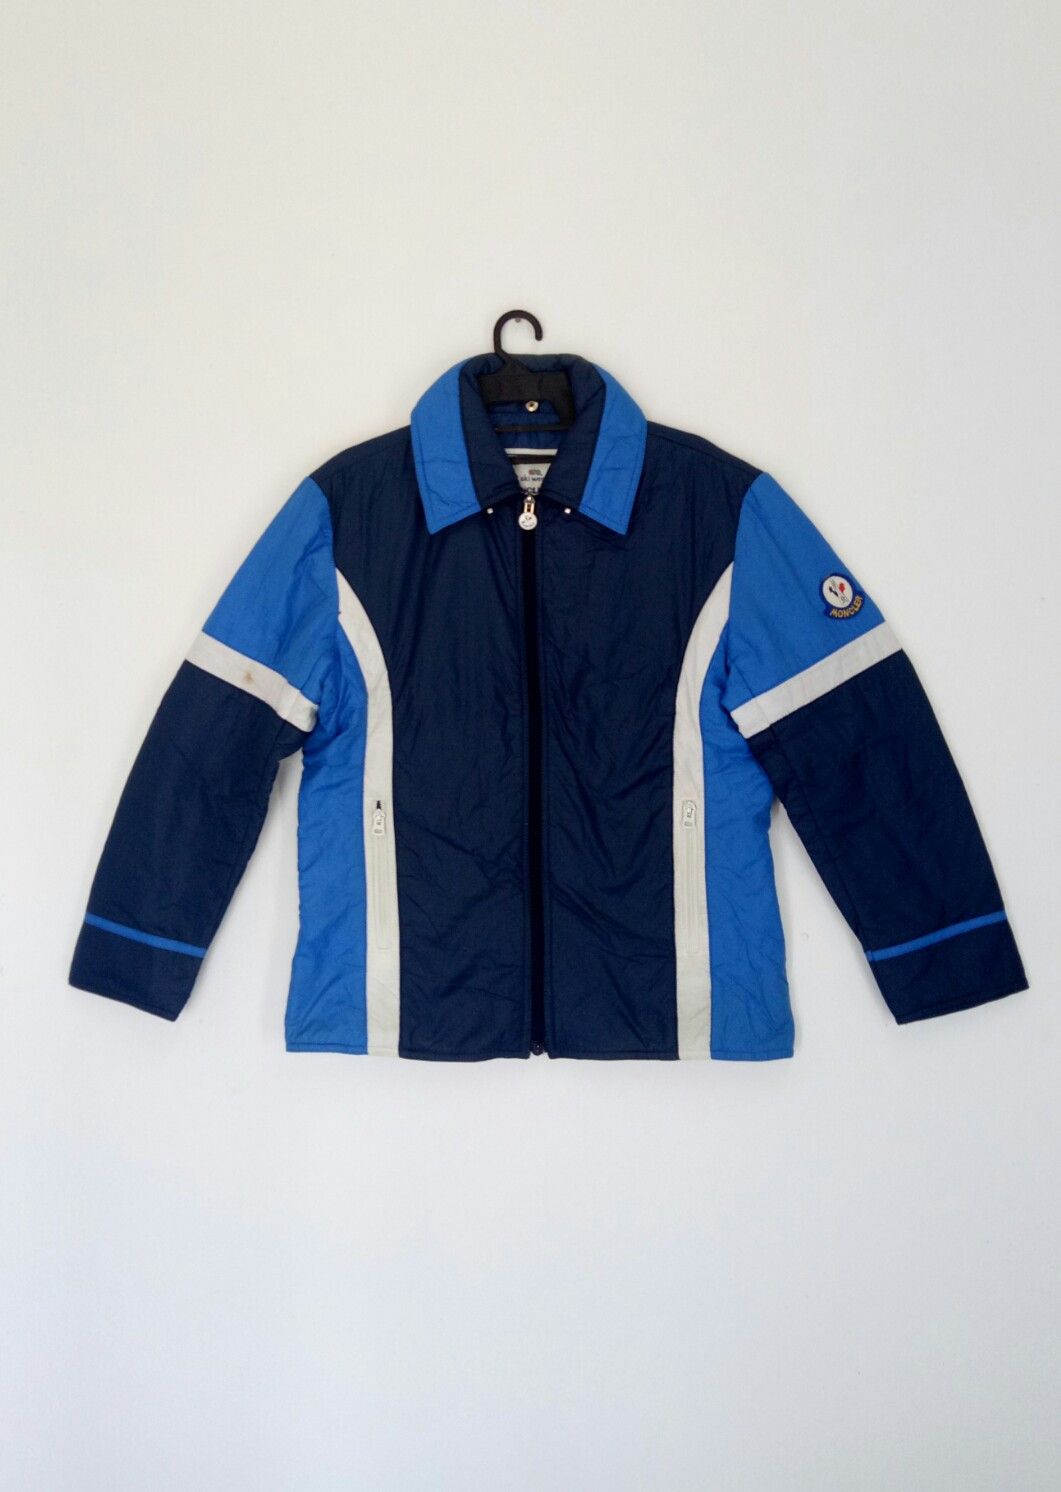 Moncler Rare!! Distressed MONCLER jacket nice design | Grailed